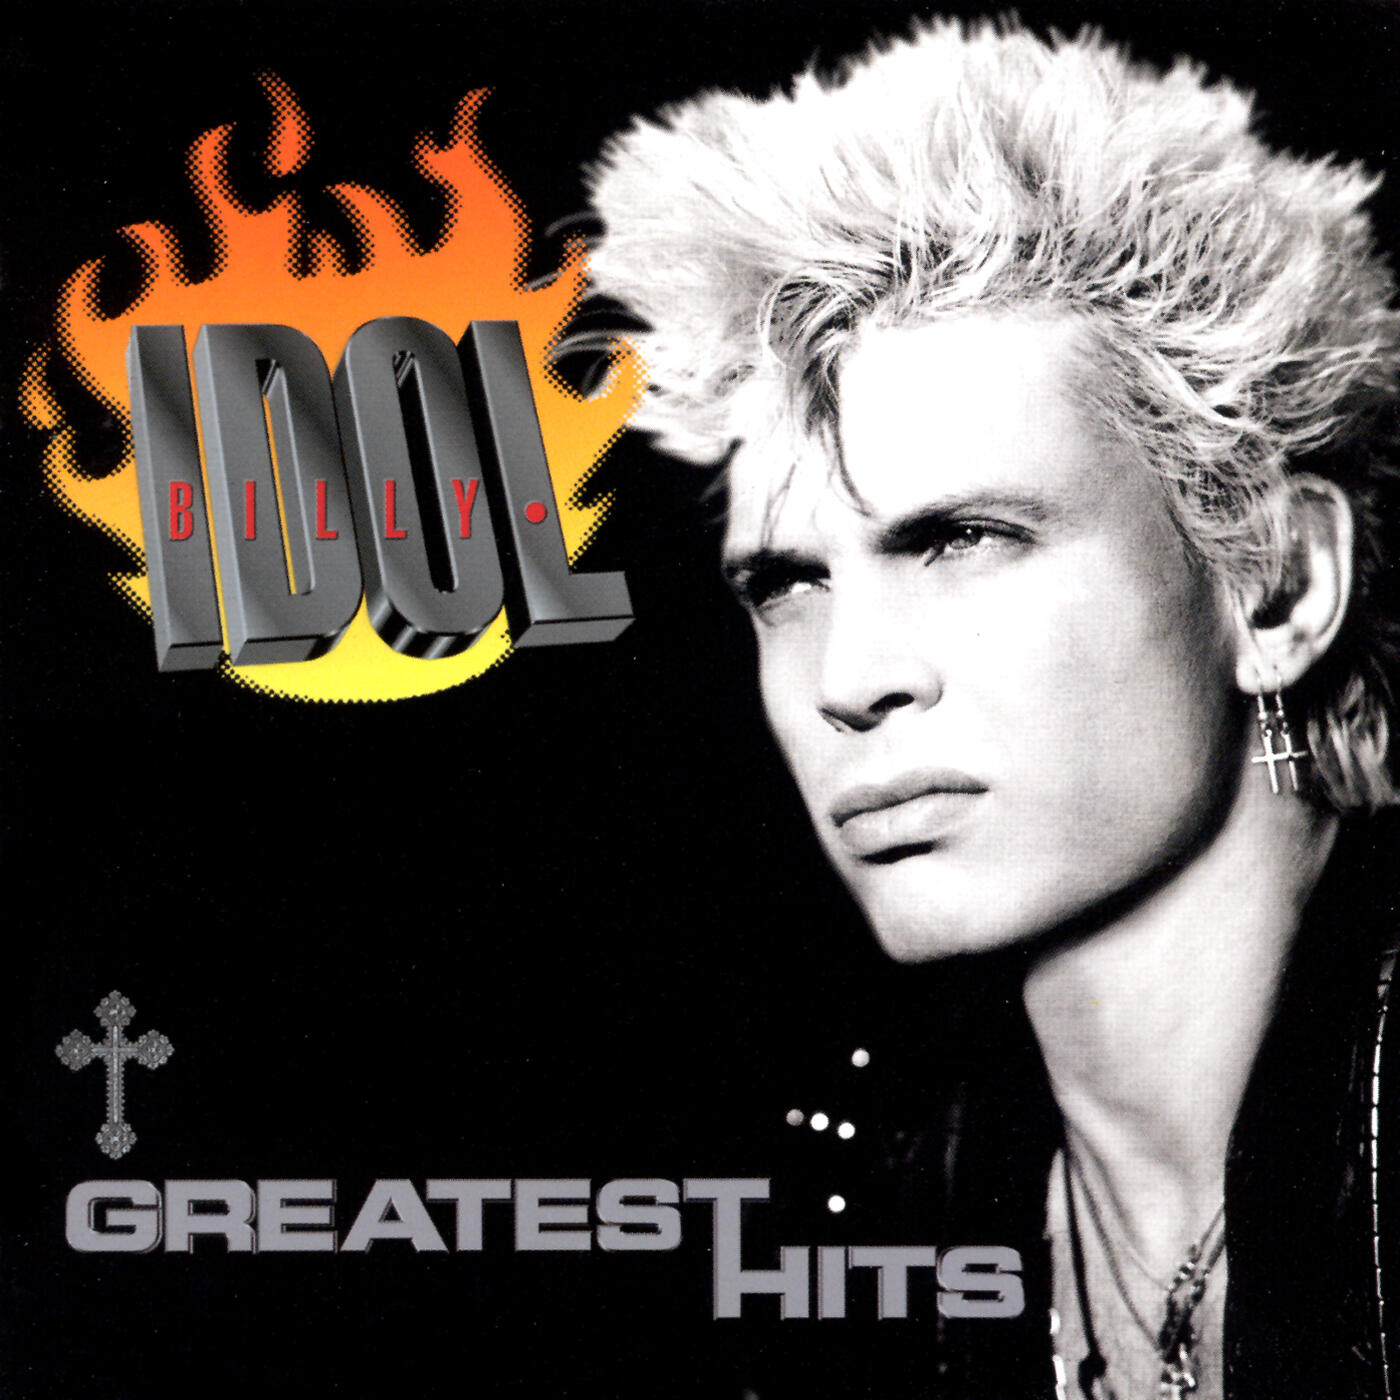 Billy Idol Greatest Hits Iheartradio